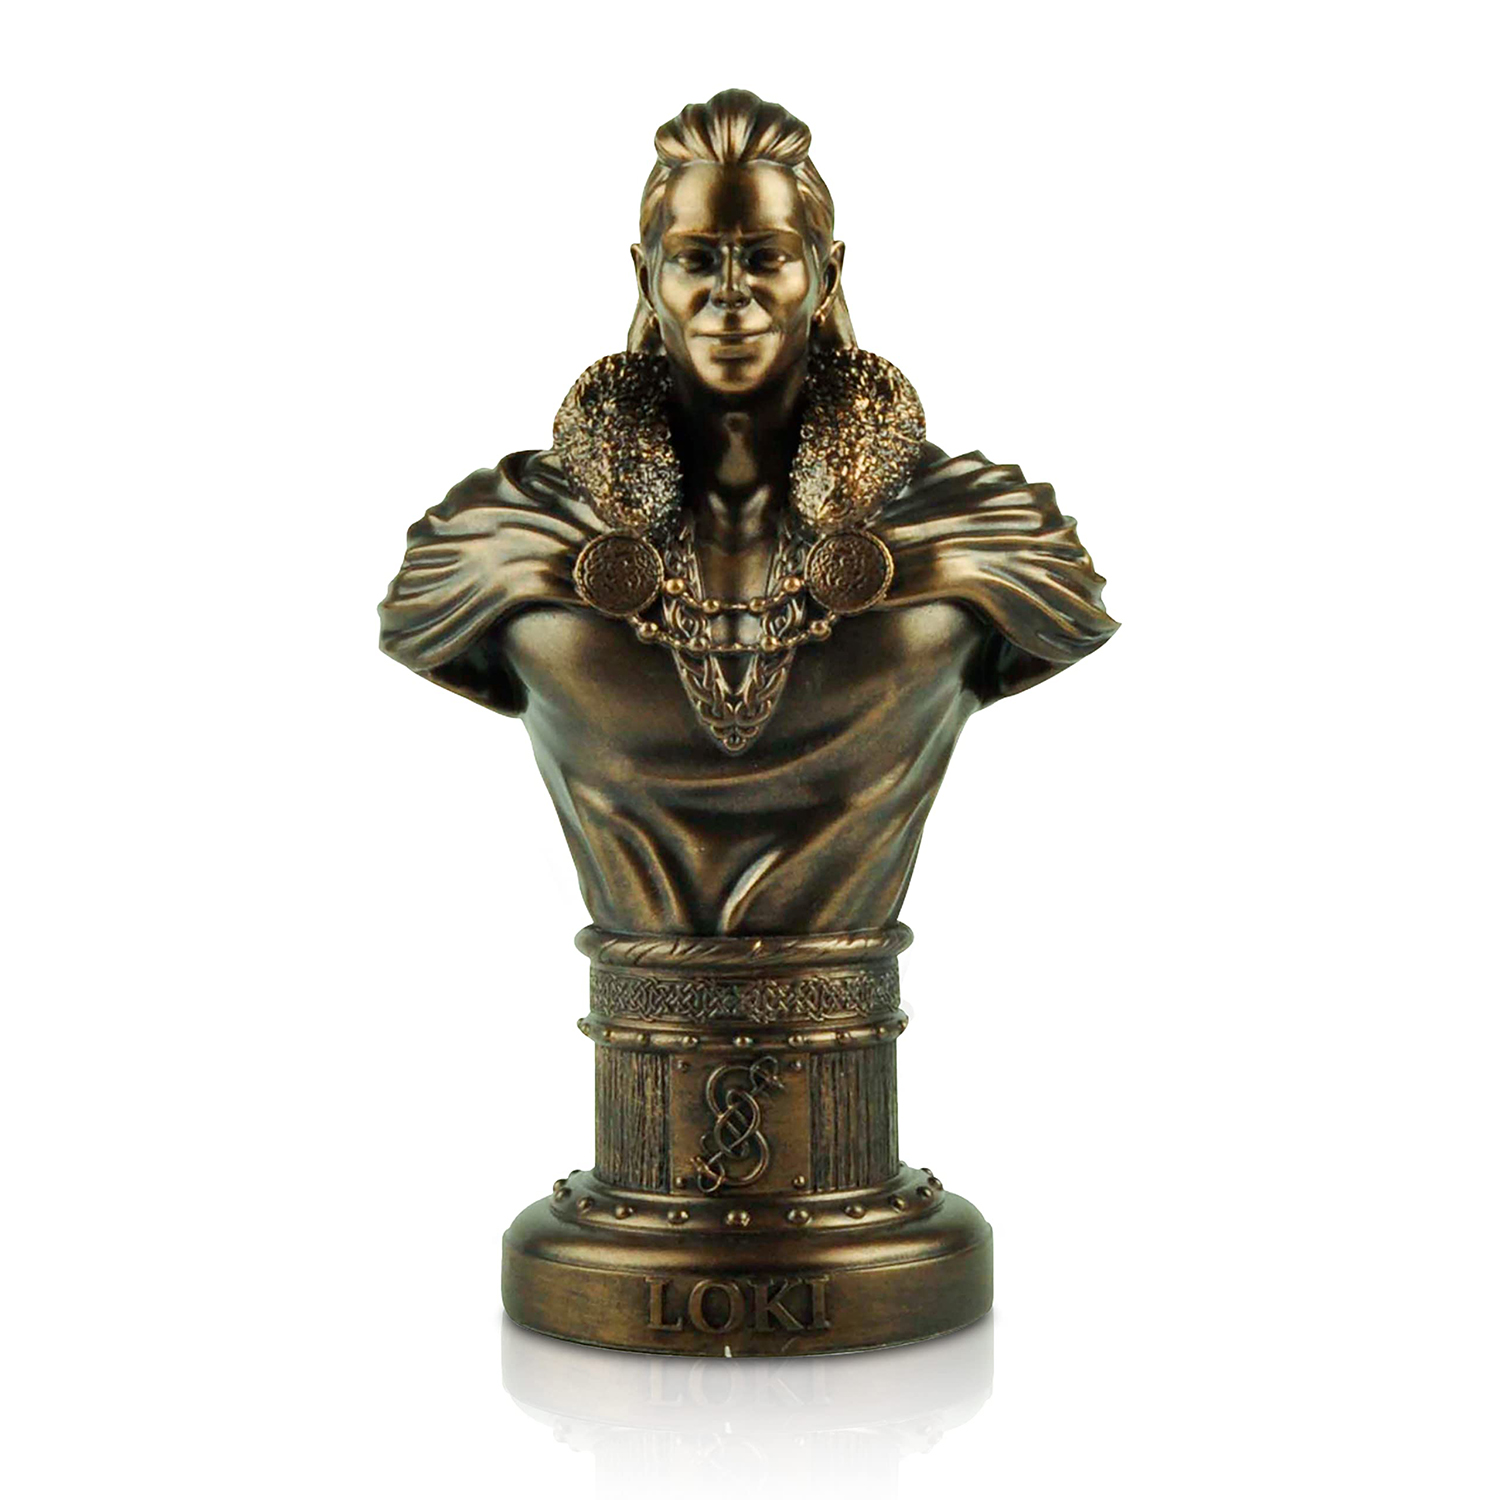 Loki Bust Bronze Sculpture